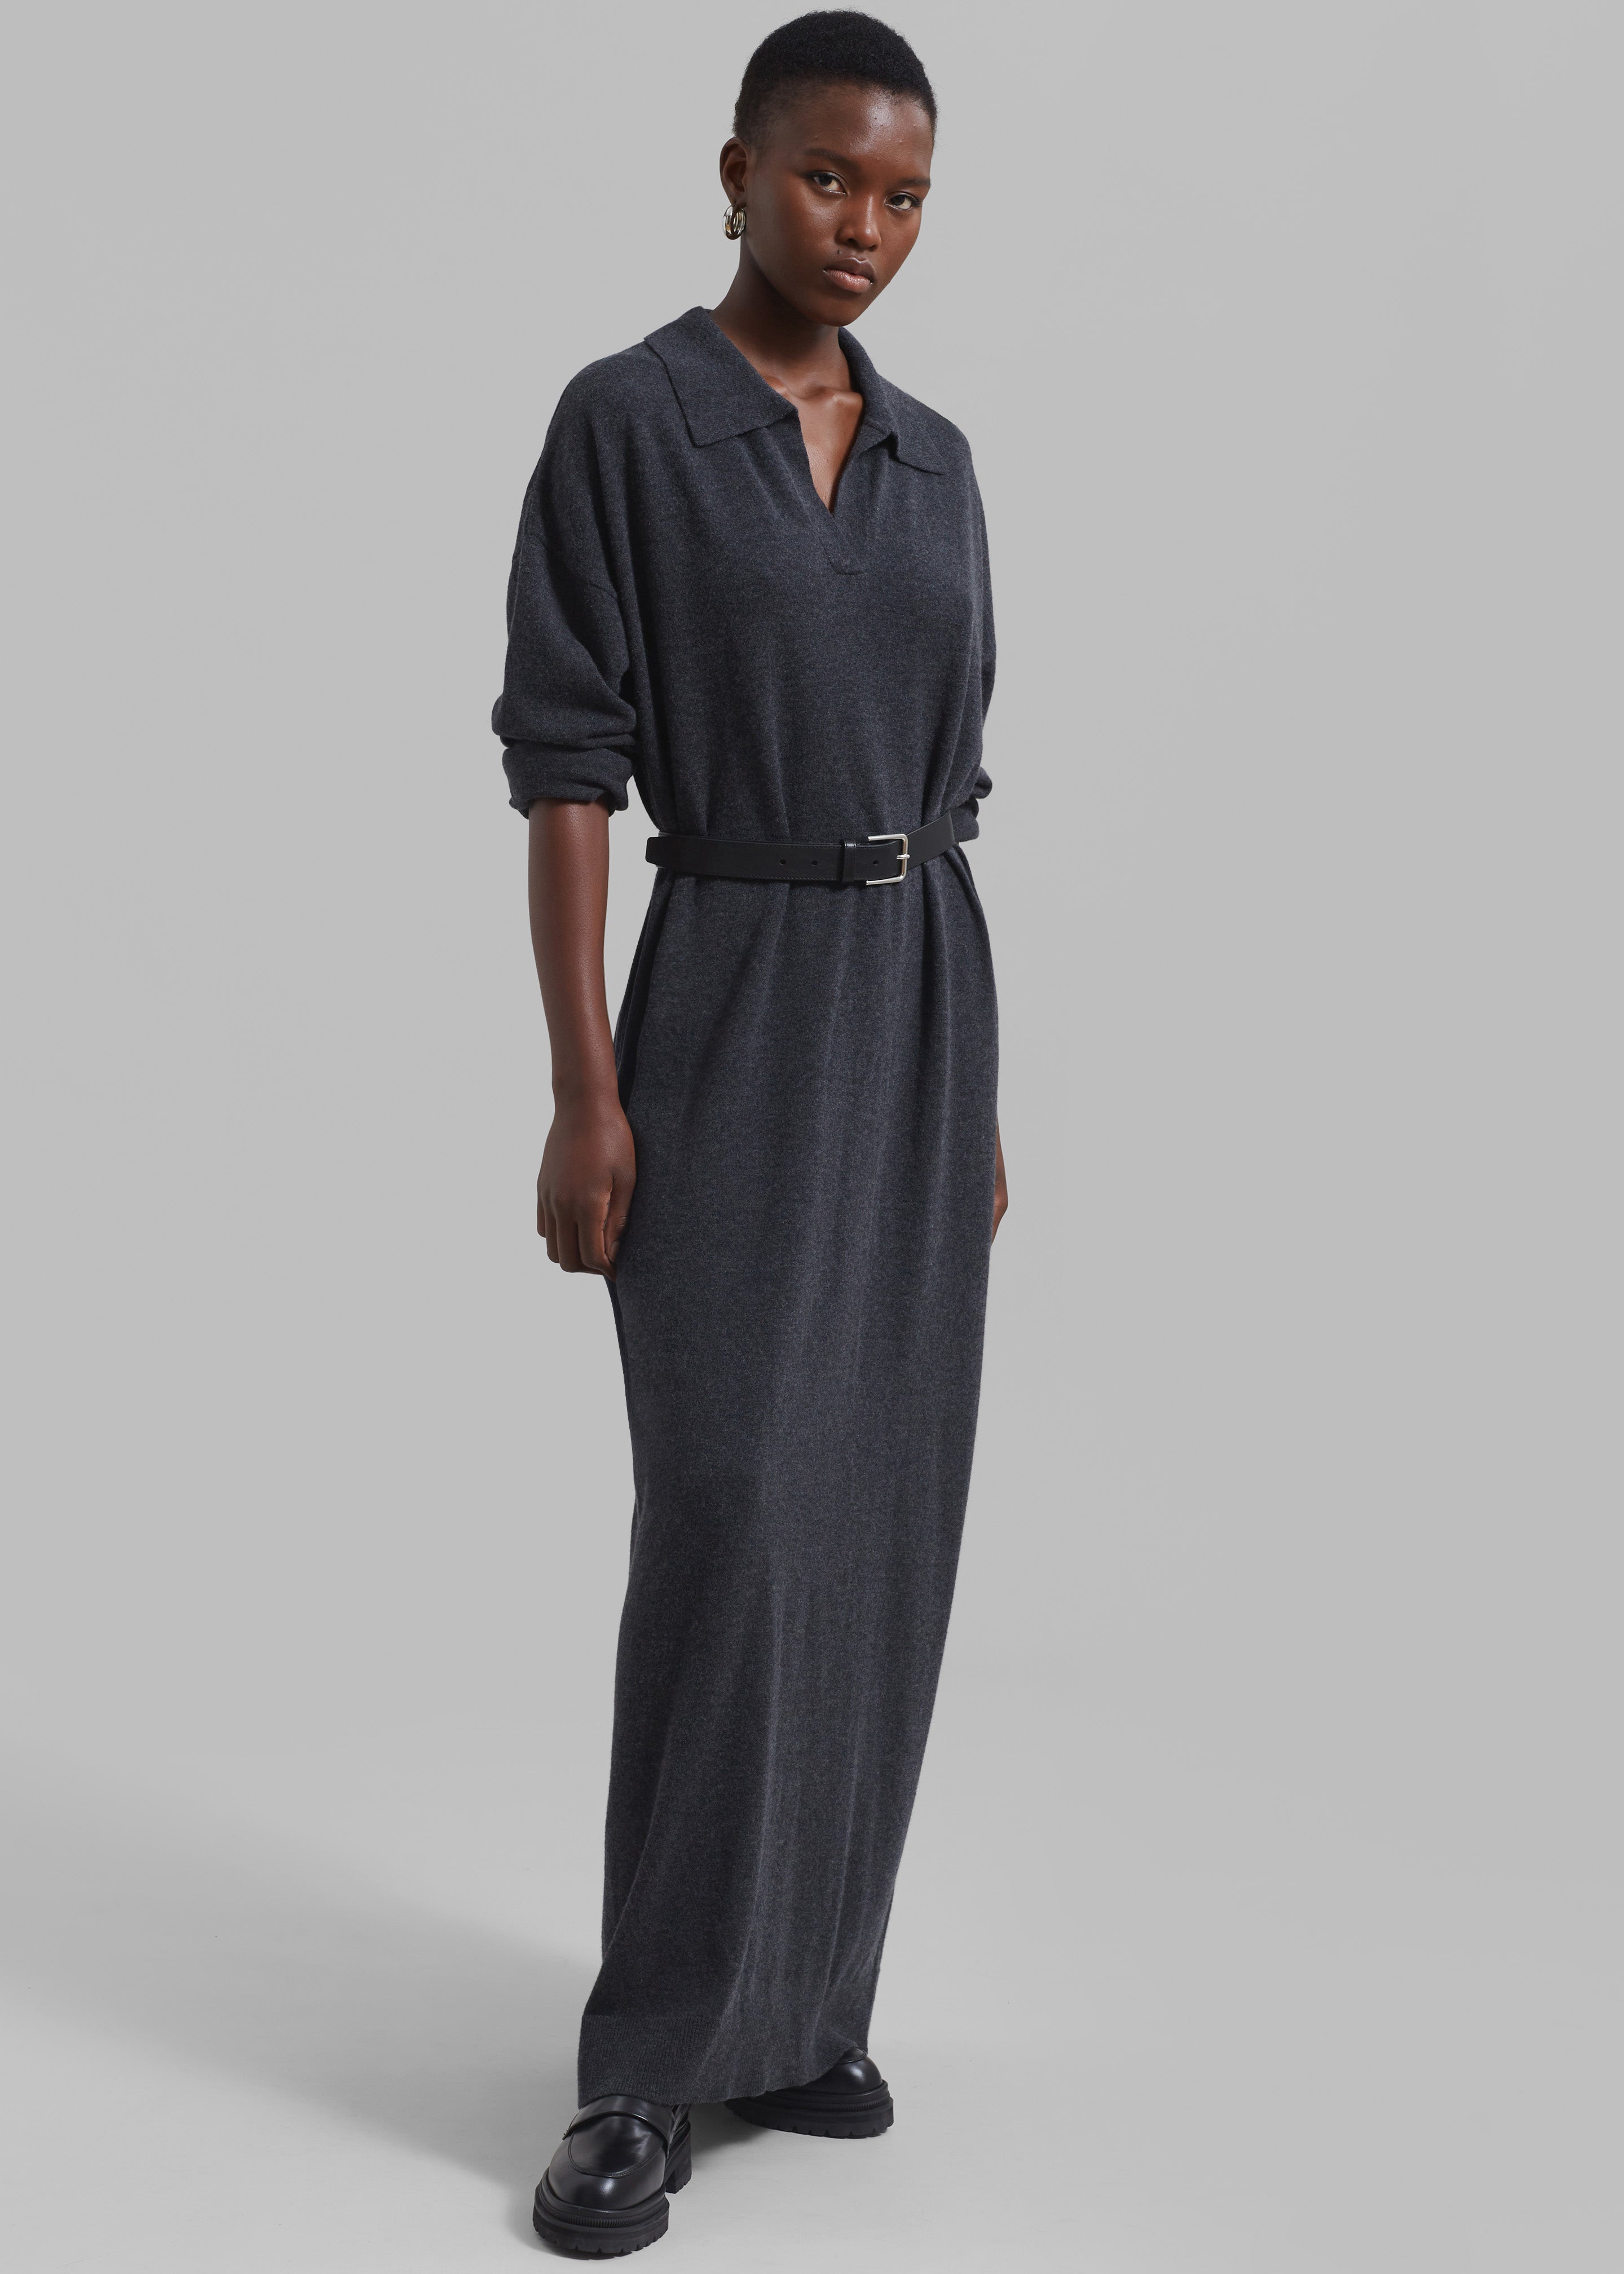 Siobhan Long Knit Dress - Charcoal - 1